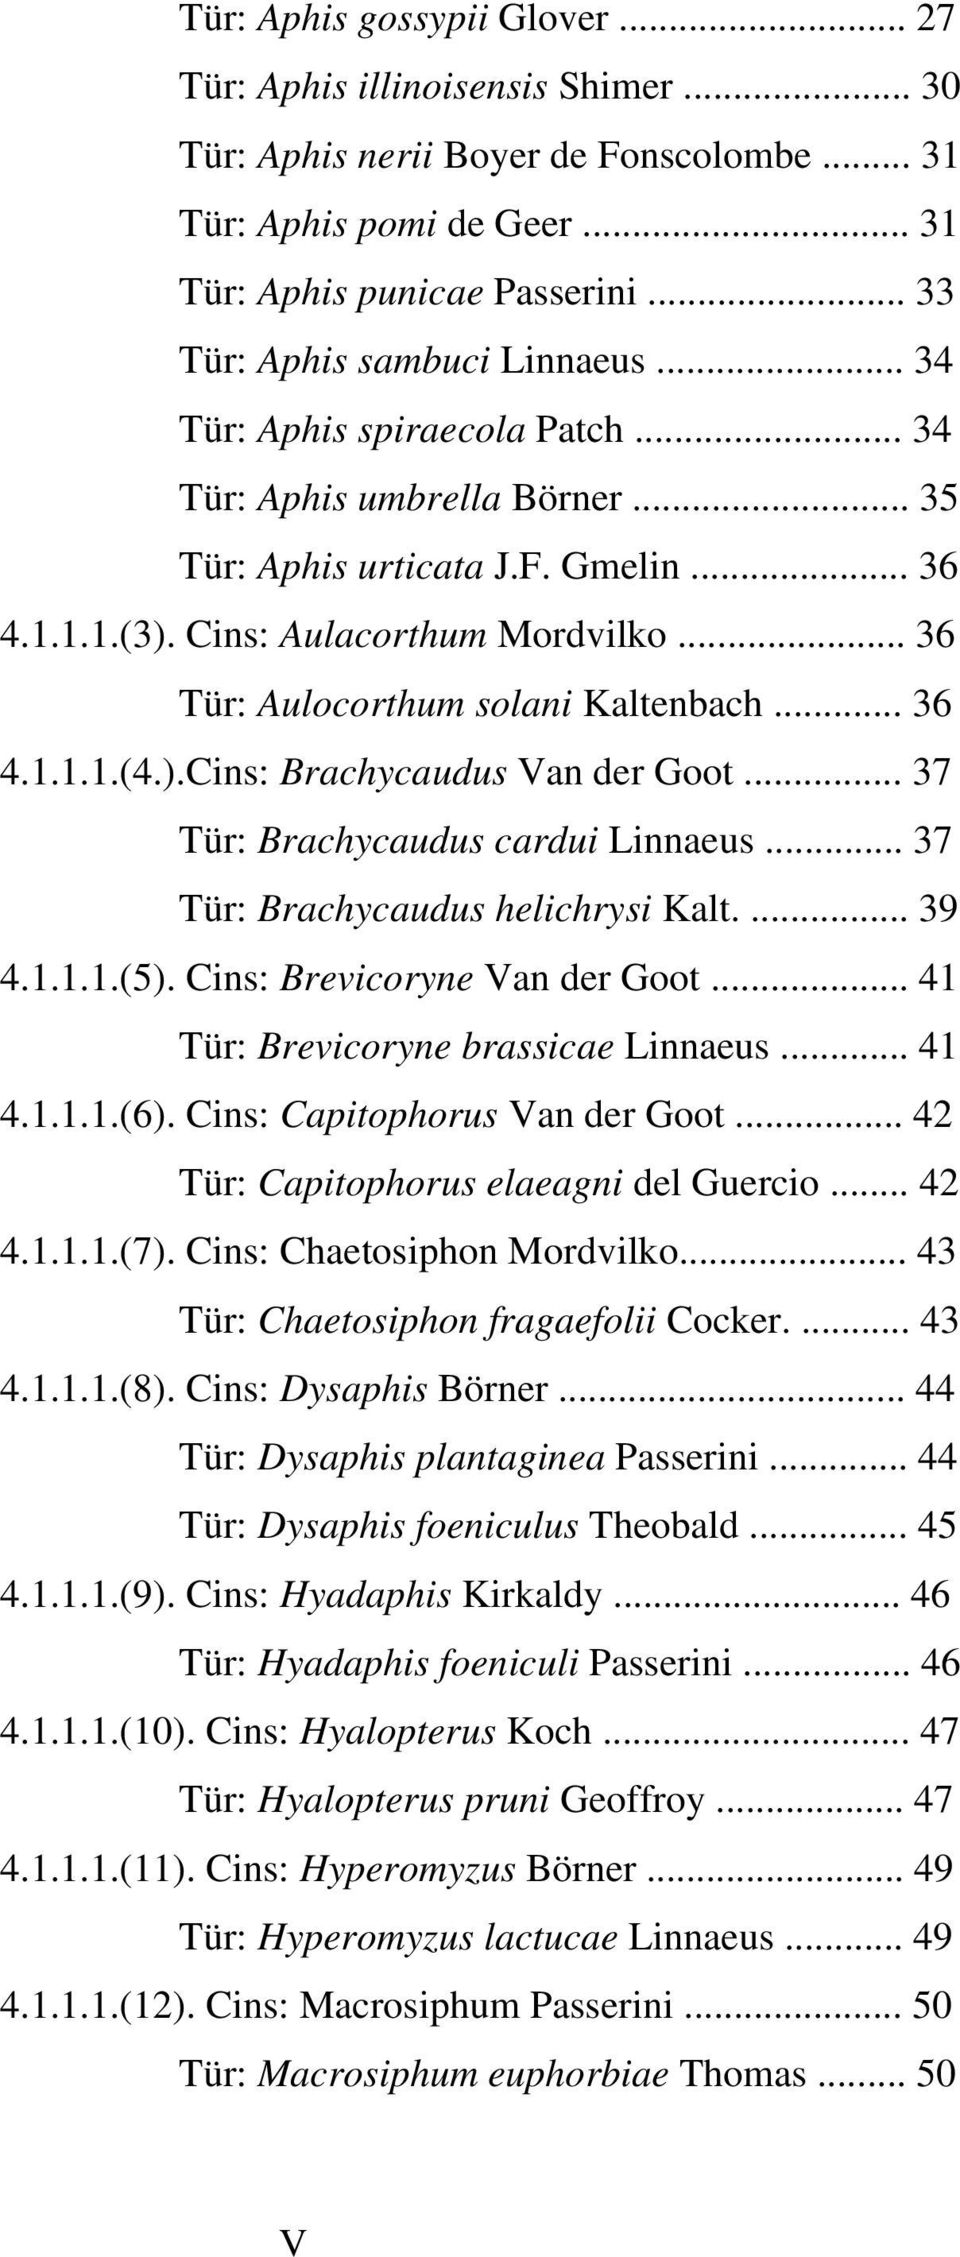 .. 36 Tür: Aulocorthum solani Kaltenbach... 36 4.1.1.1.(4.).Cins: Brachycaudus Van der Goot... 37 Tür: Brachycaudus cardui Linnaeus... 37 Tür: Brachycaudus helichrysi Kalt.... 39 4.1.1.1.(5).